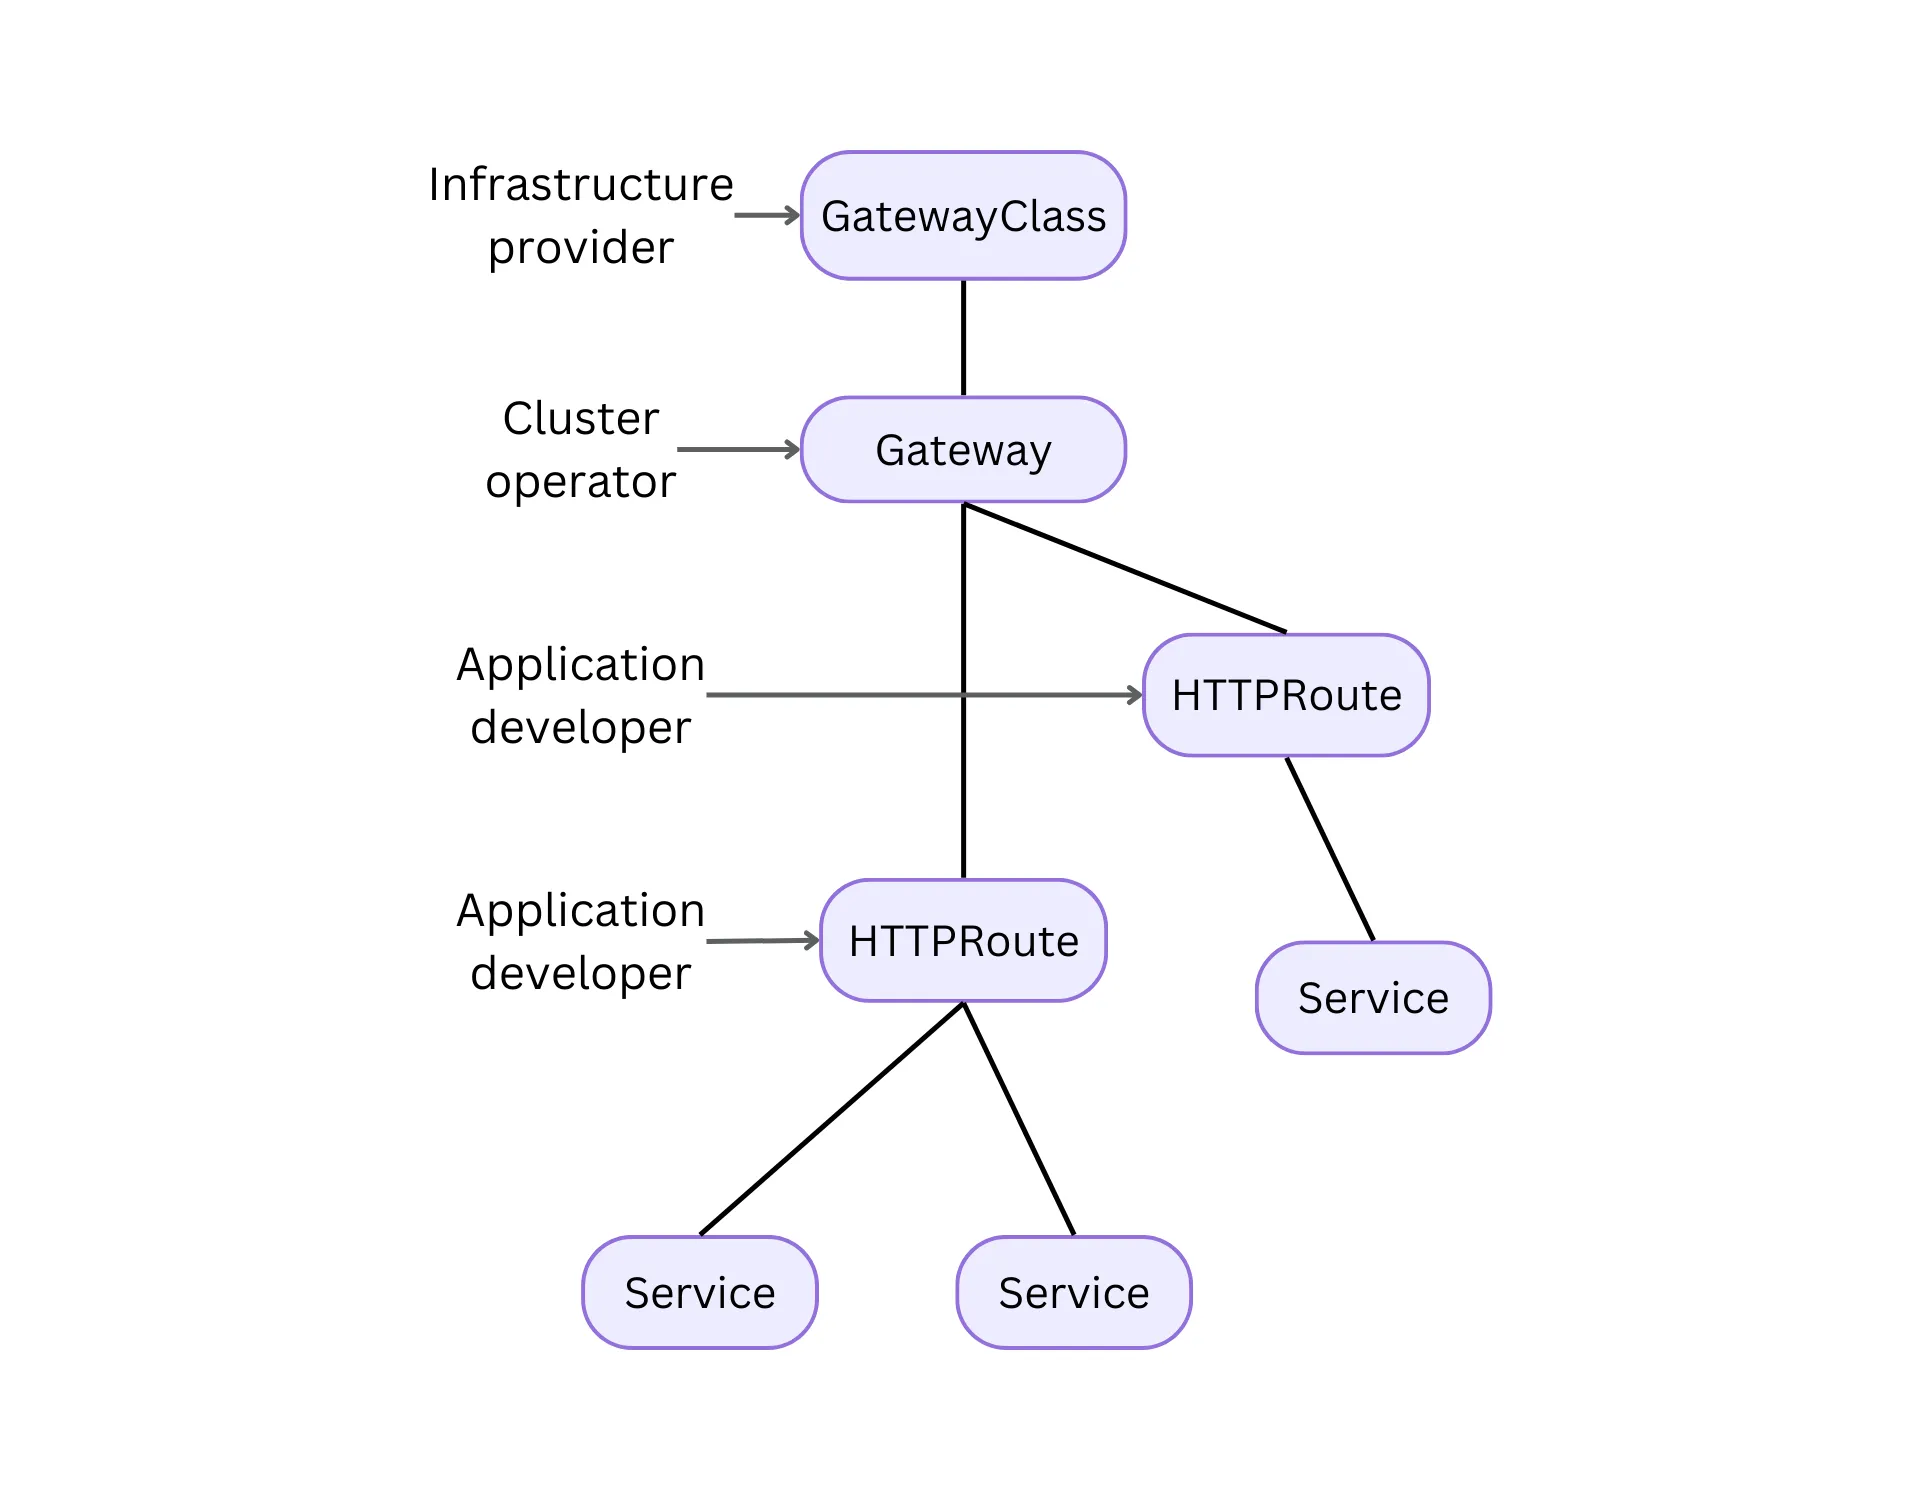 The Gateway API